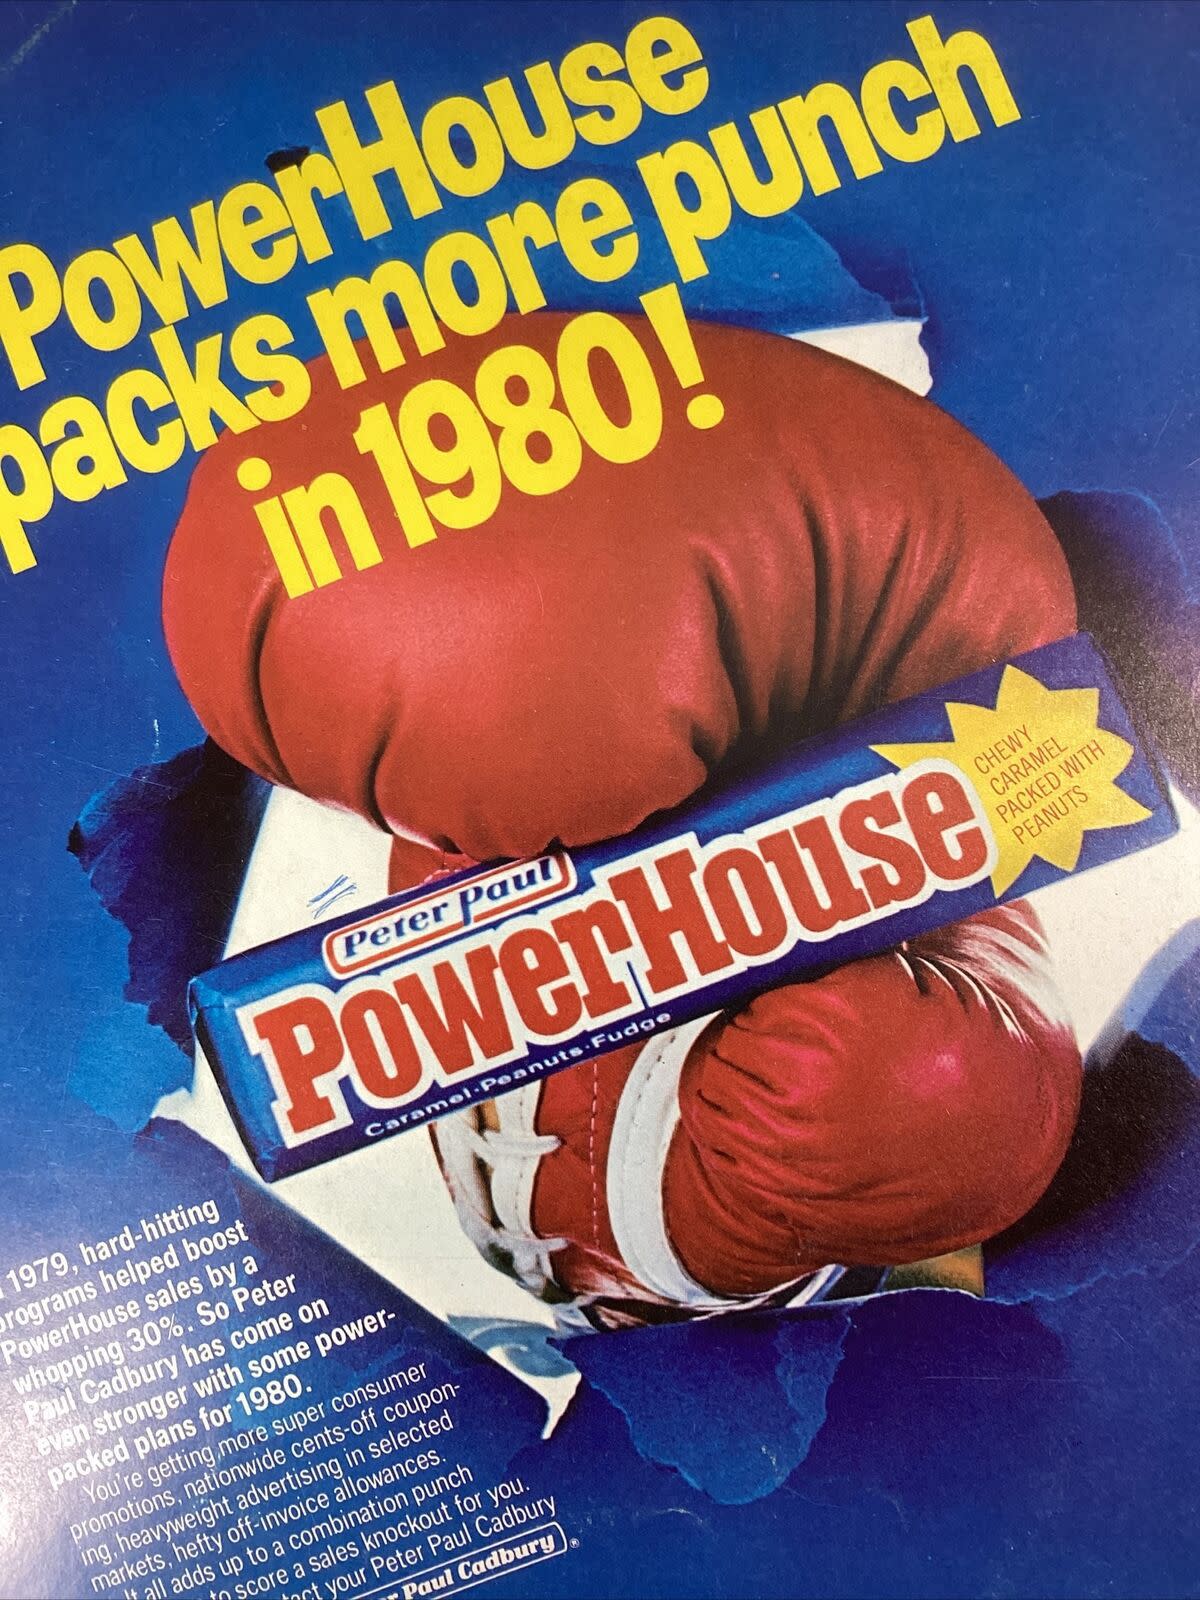 Powerhouse candy bar